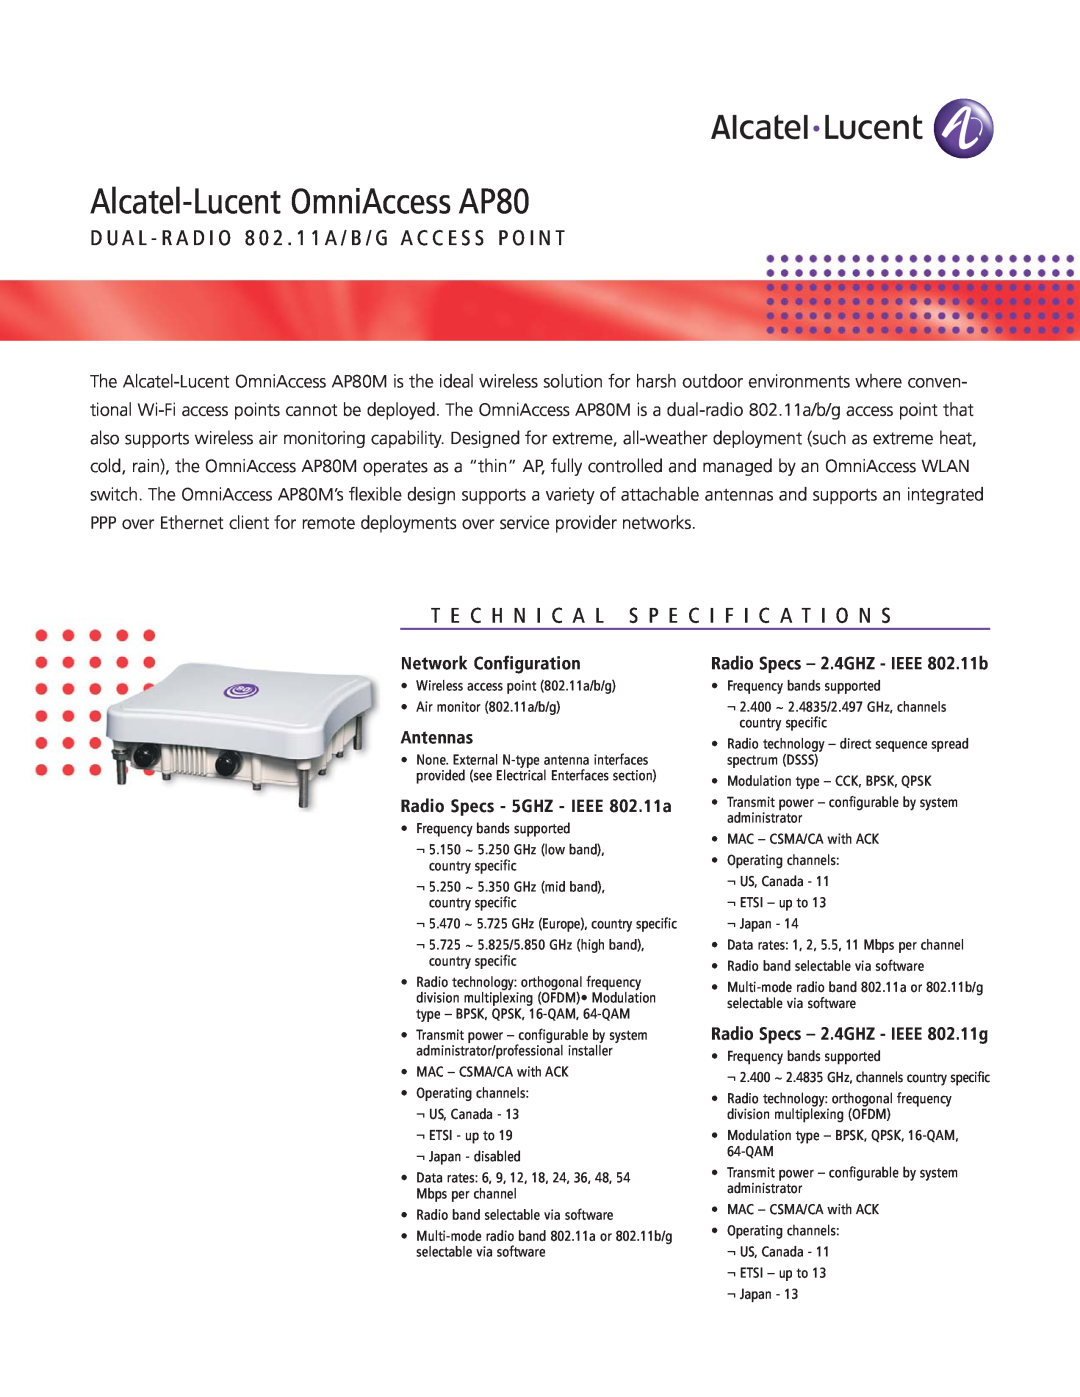 Alcatel-Lucent AP80 technical specifications D U A L - R A D I O 8 0 2 . 1 1 A / B / G A C C E S S P O I N T 